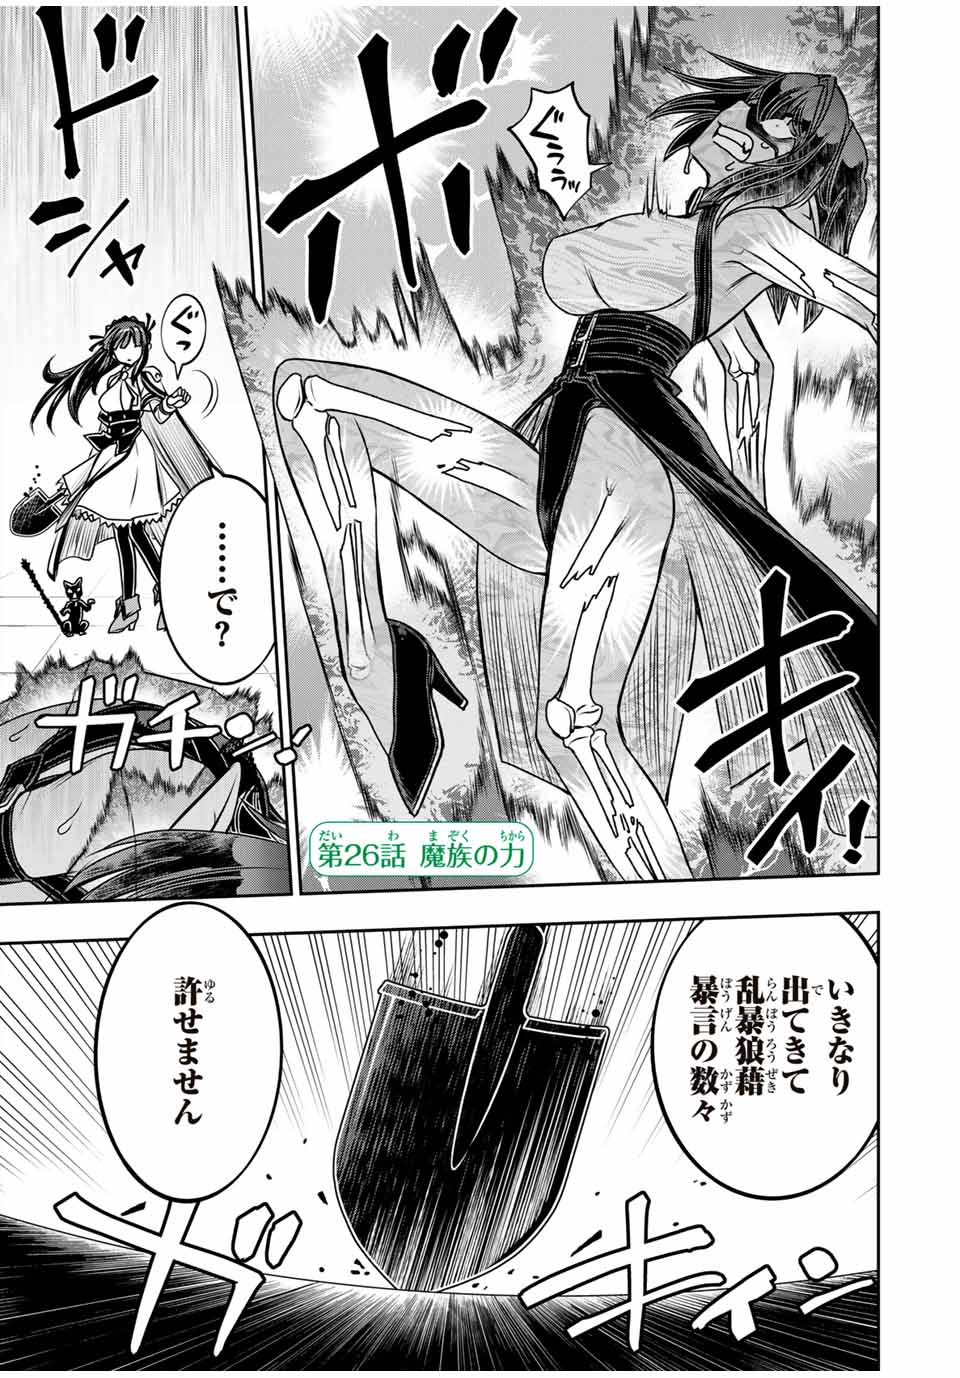 Nengan no Akuyaku Reijou (Last Boss) no Karada wo Teniiretazo!  - Chapter 26 - Page 1